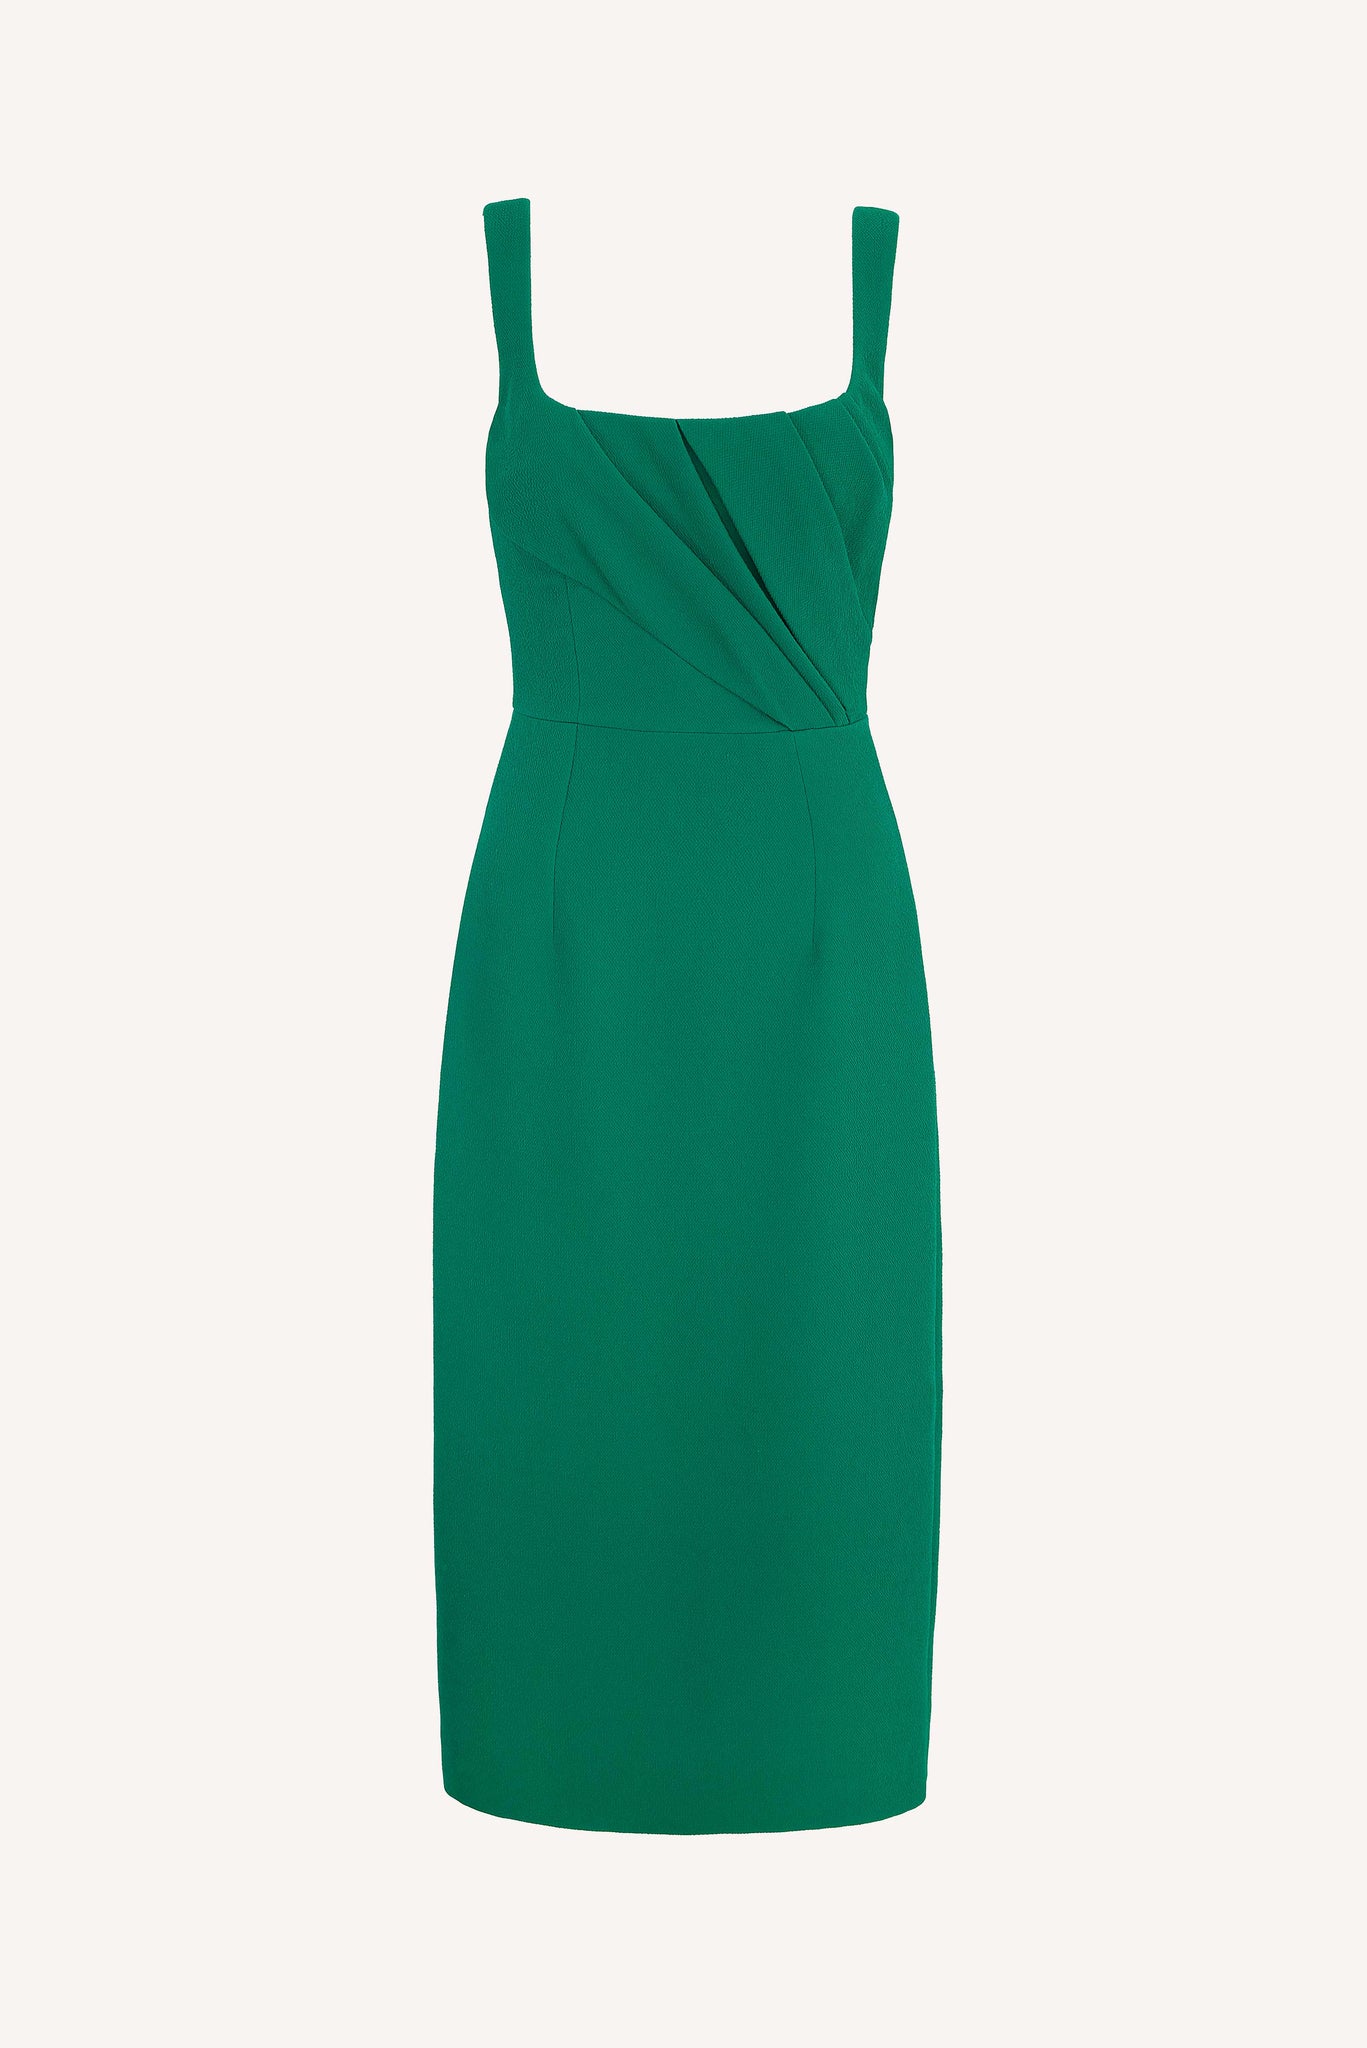 Arina Dress in Jade Green Double Crepe | Emilia Wickstead